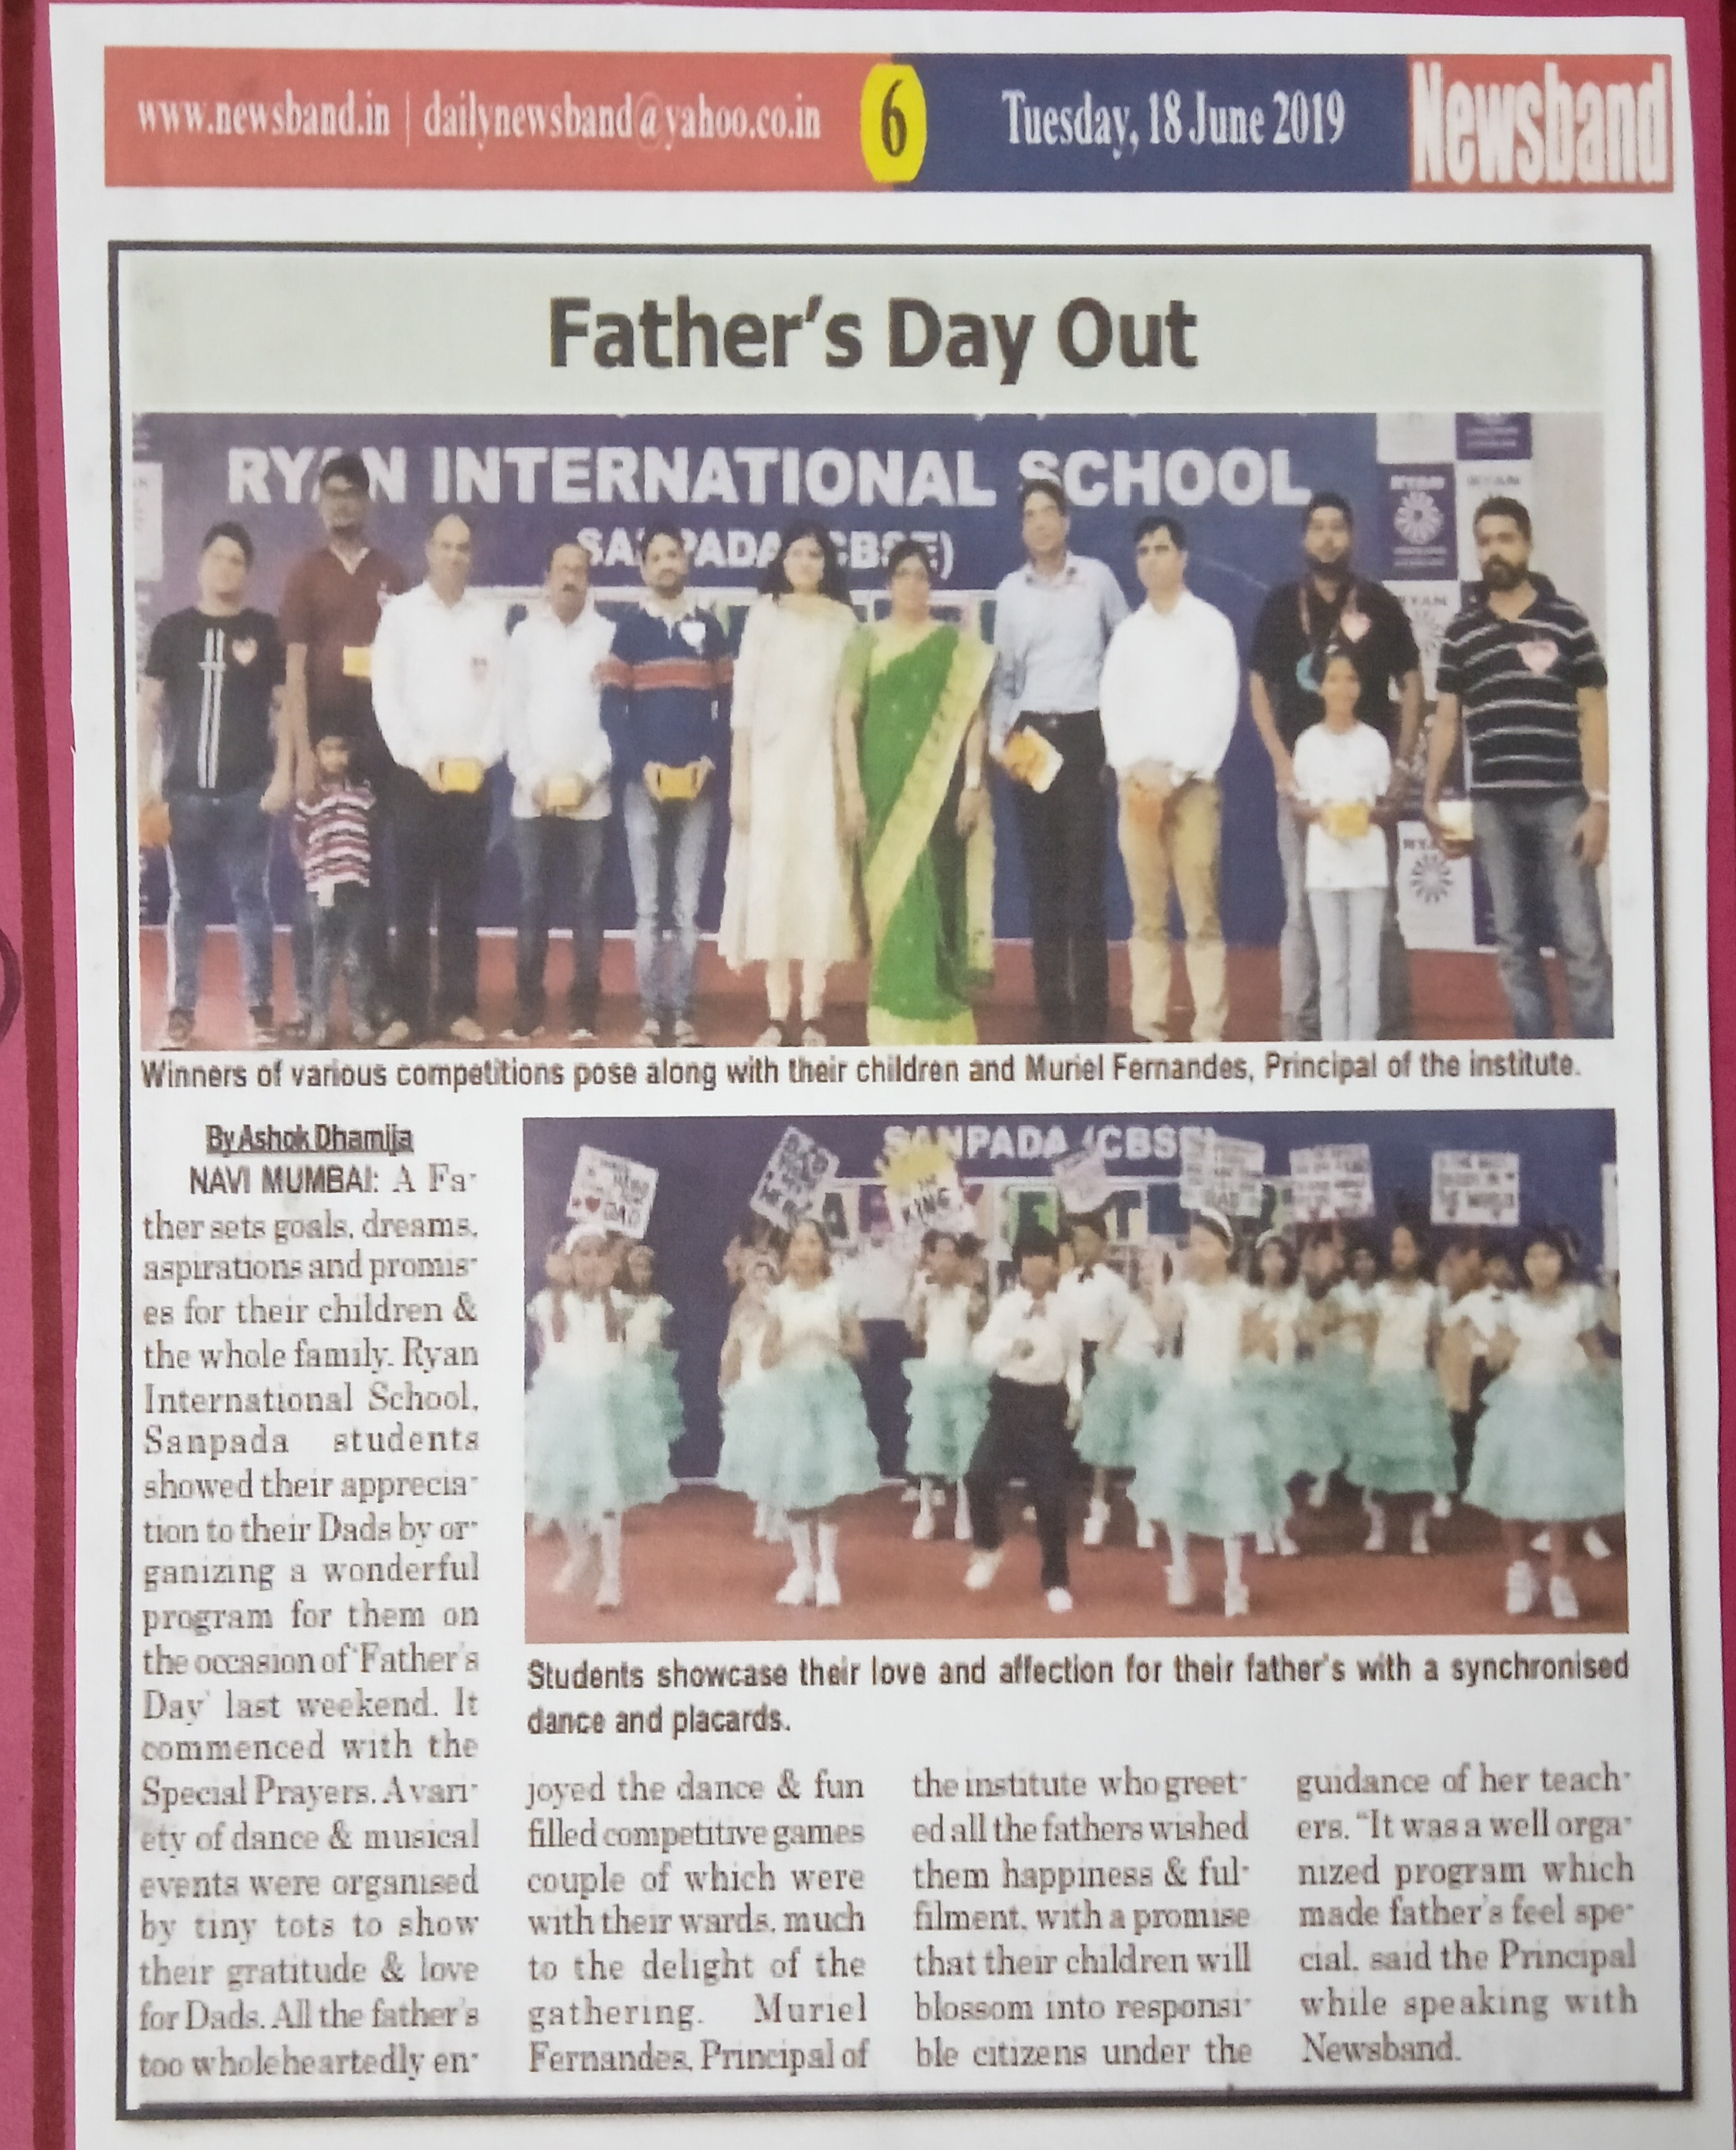 Father’s Day was featured in Newsband - Ryan International School, Sanpada